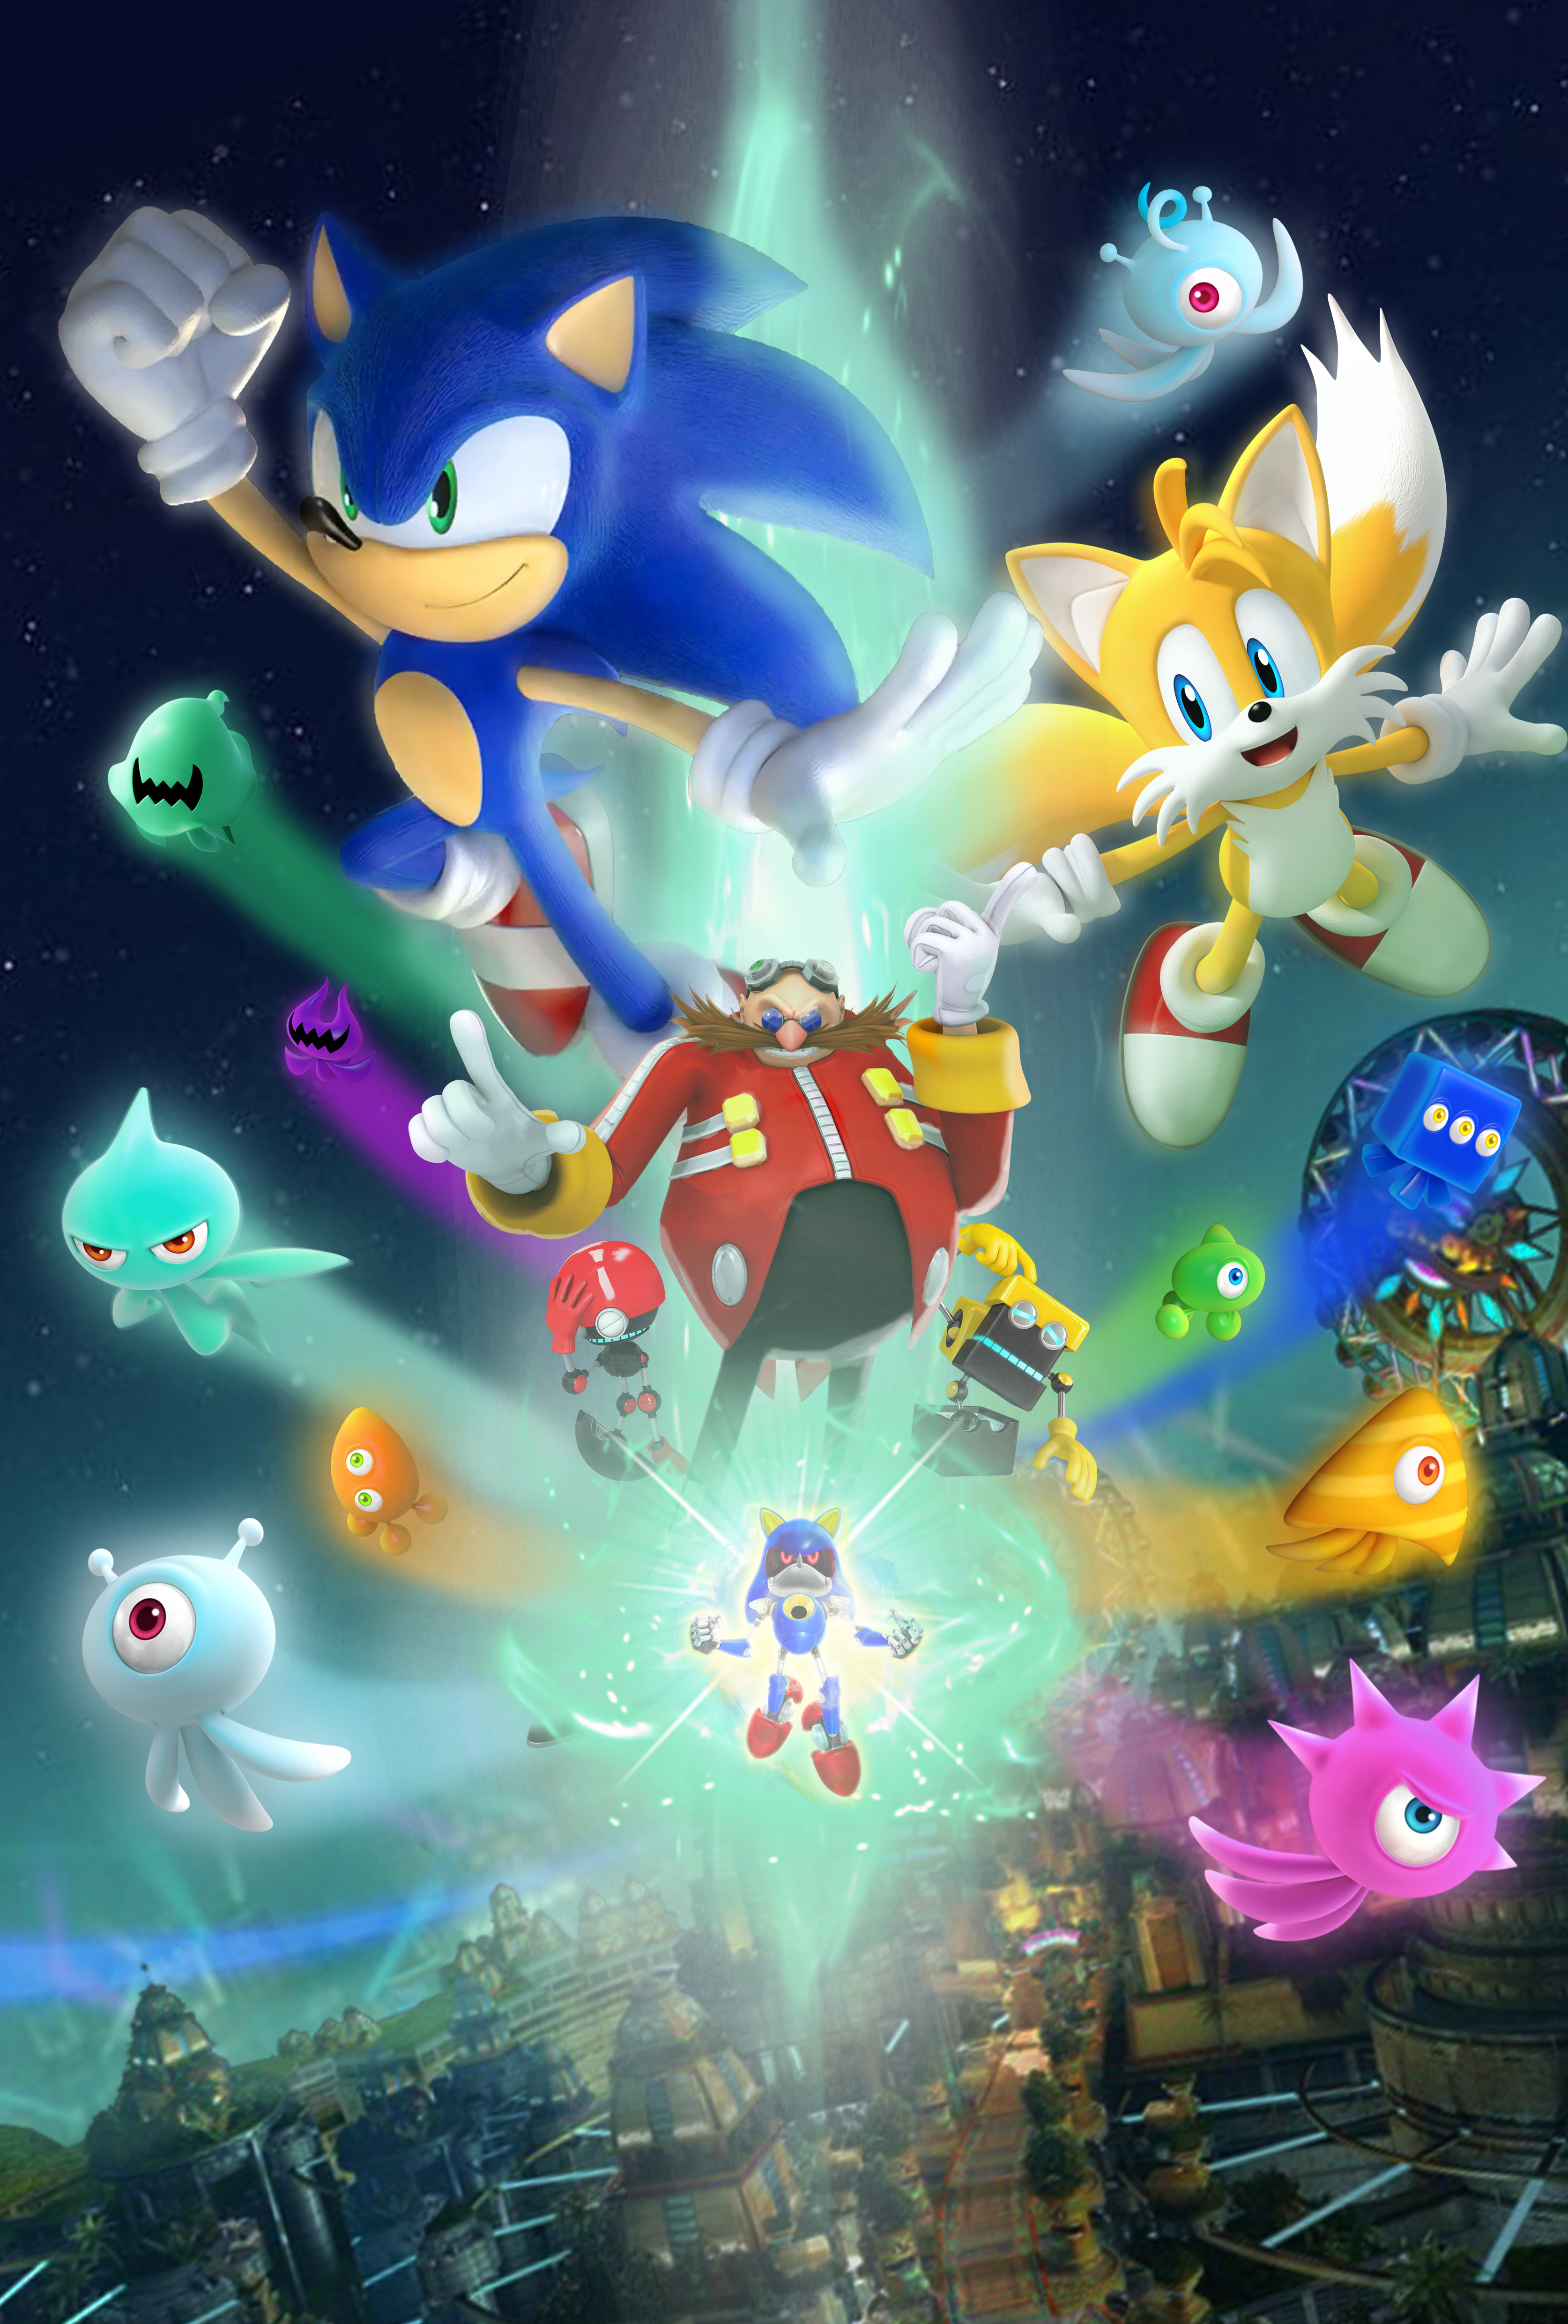 Sonic the Hedgehog 2006 Wallpaper V2 by 9029561 on DeviantArt